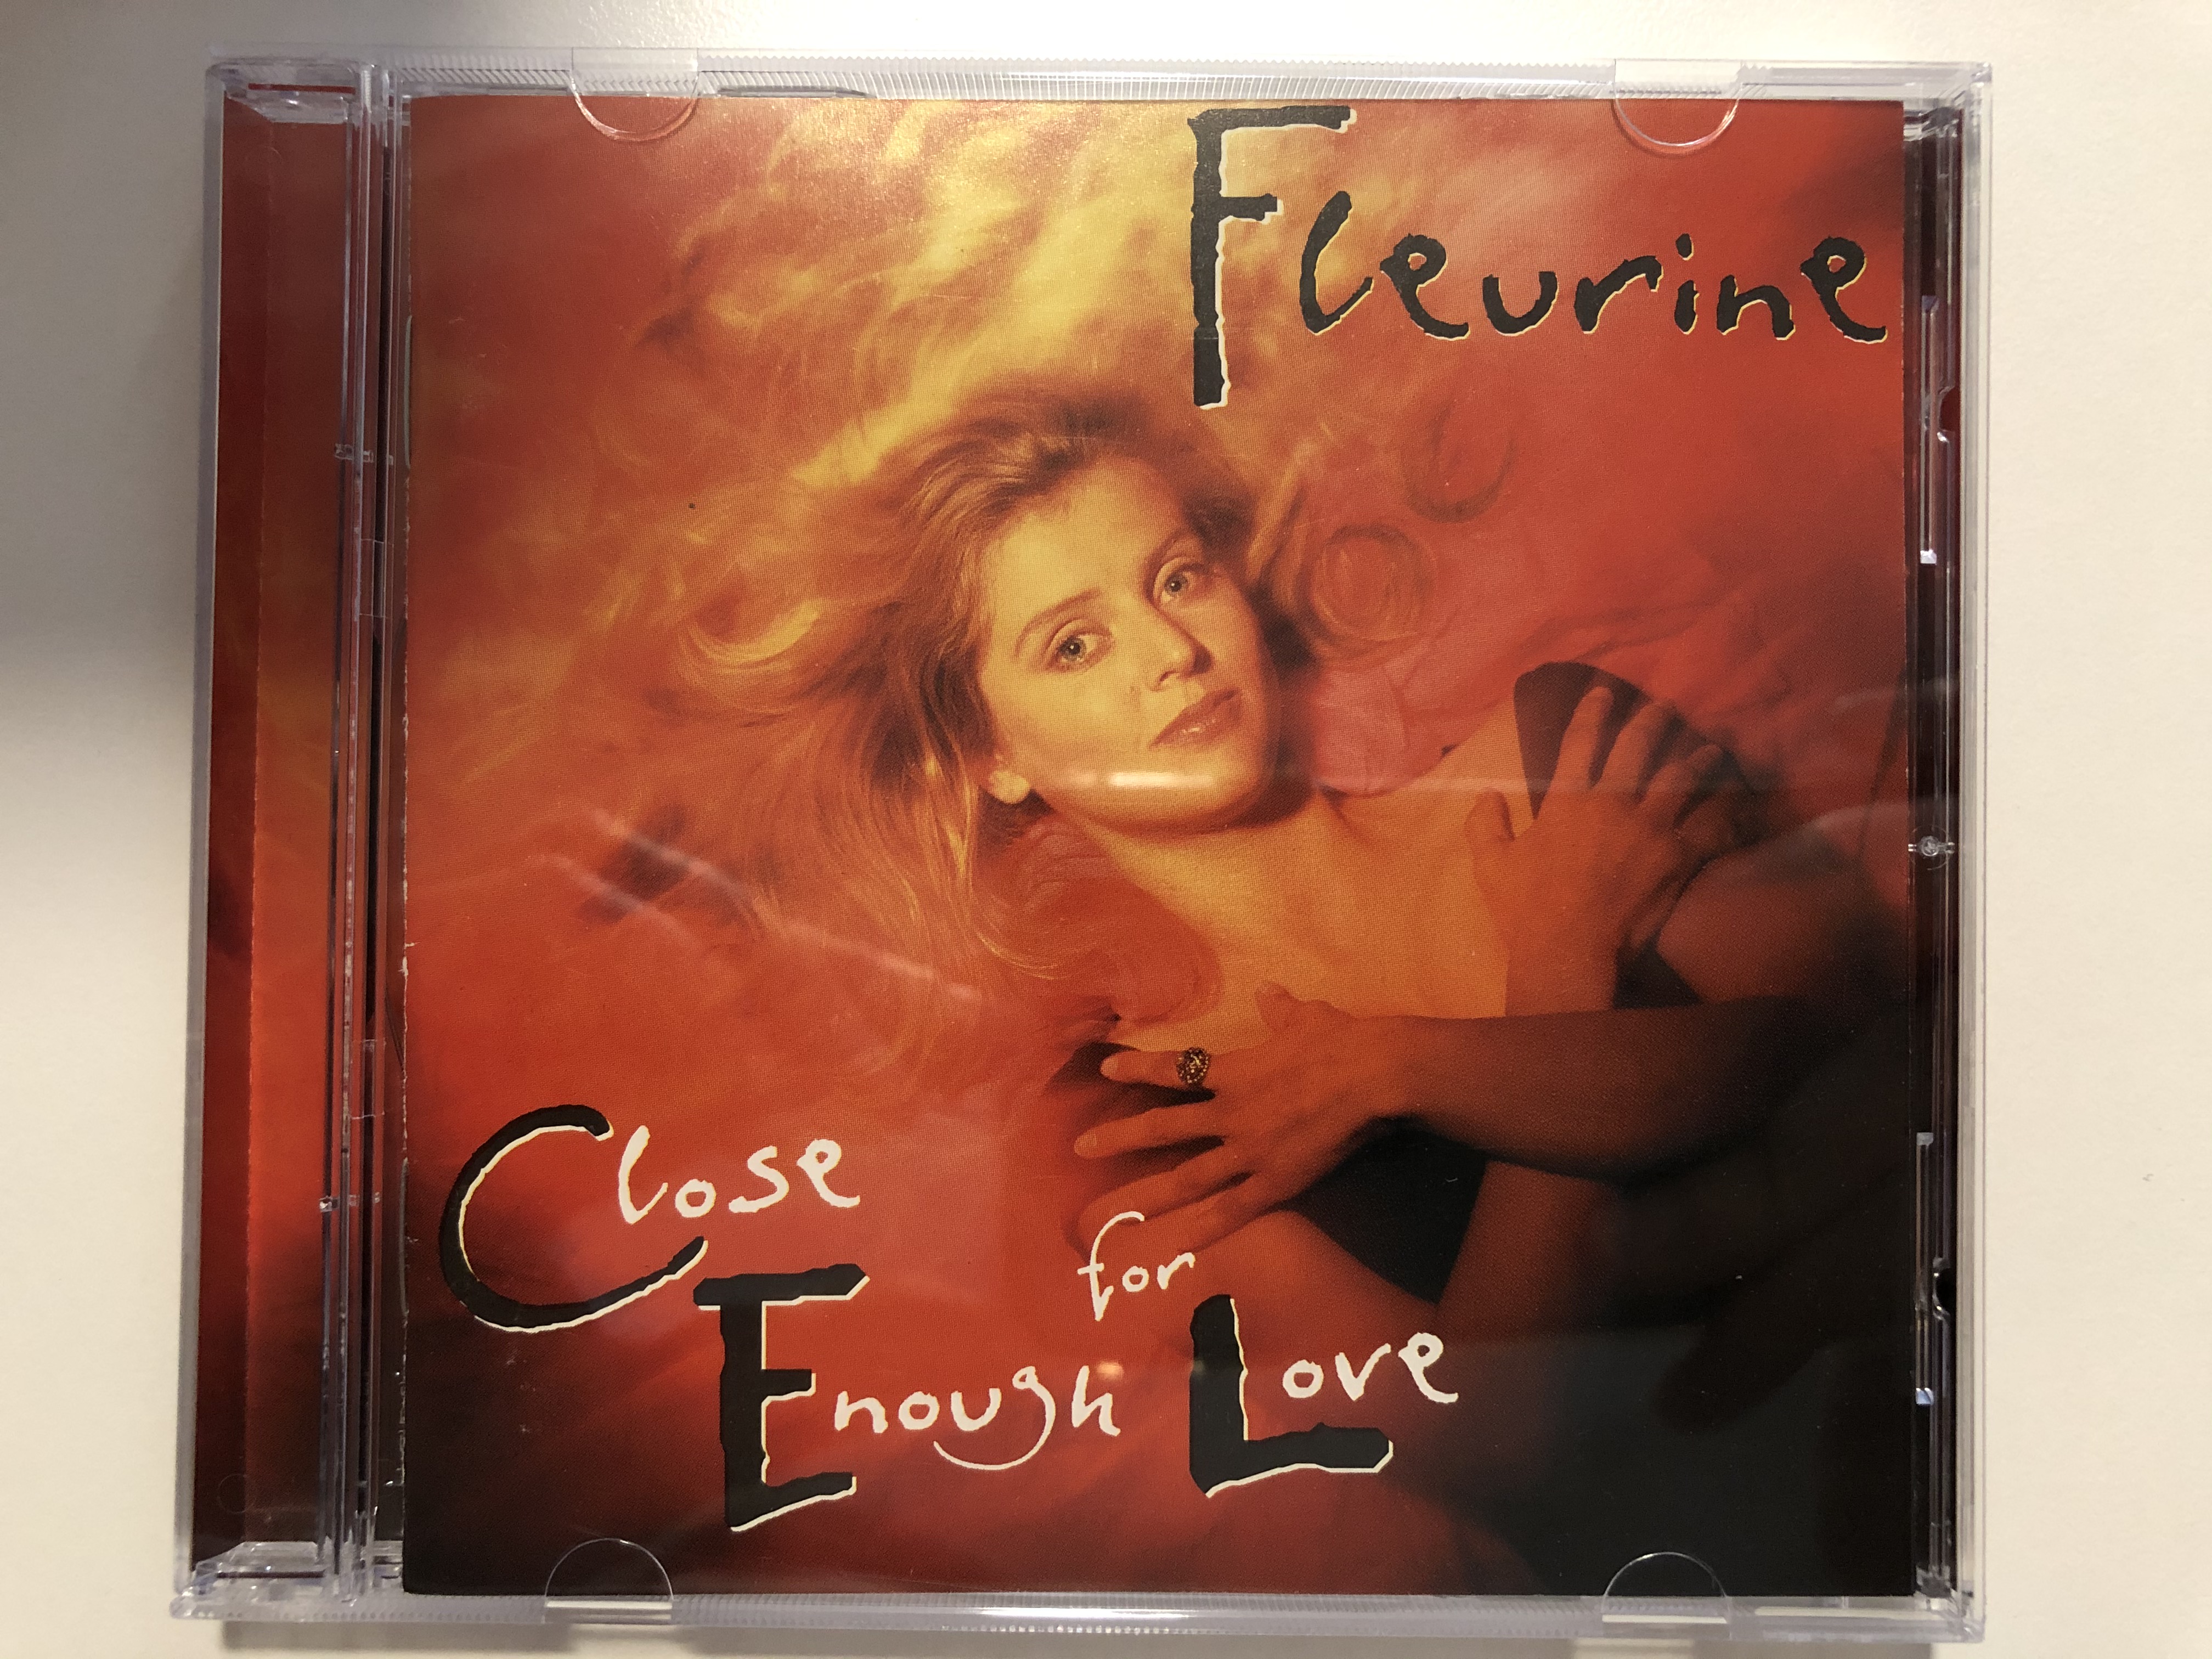 fleurine-close-enough-for-love-emarcy-audio-cd-2000-157-548-2-1-.jpg